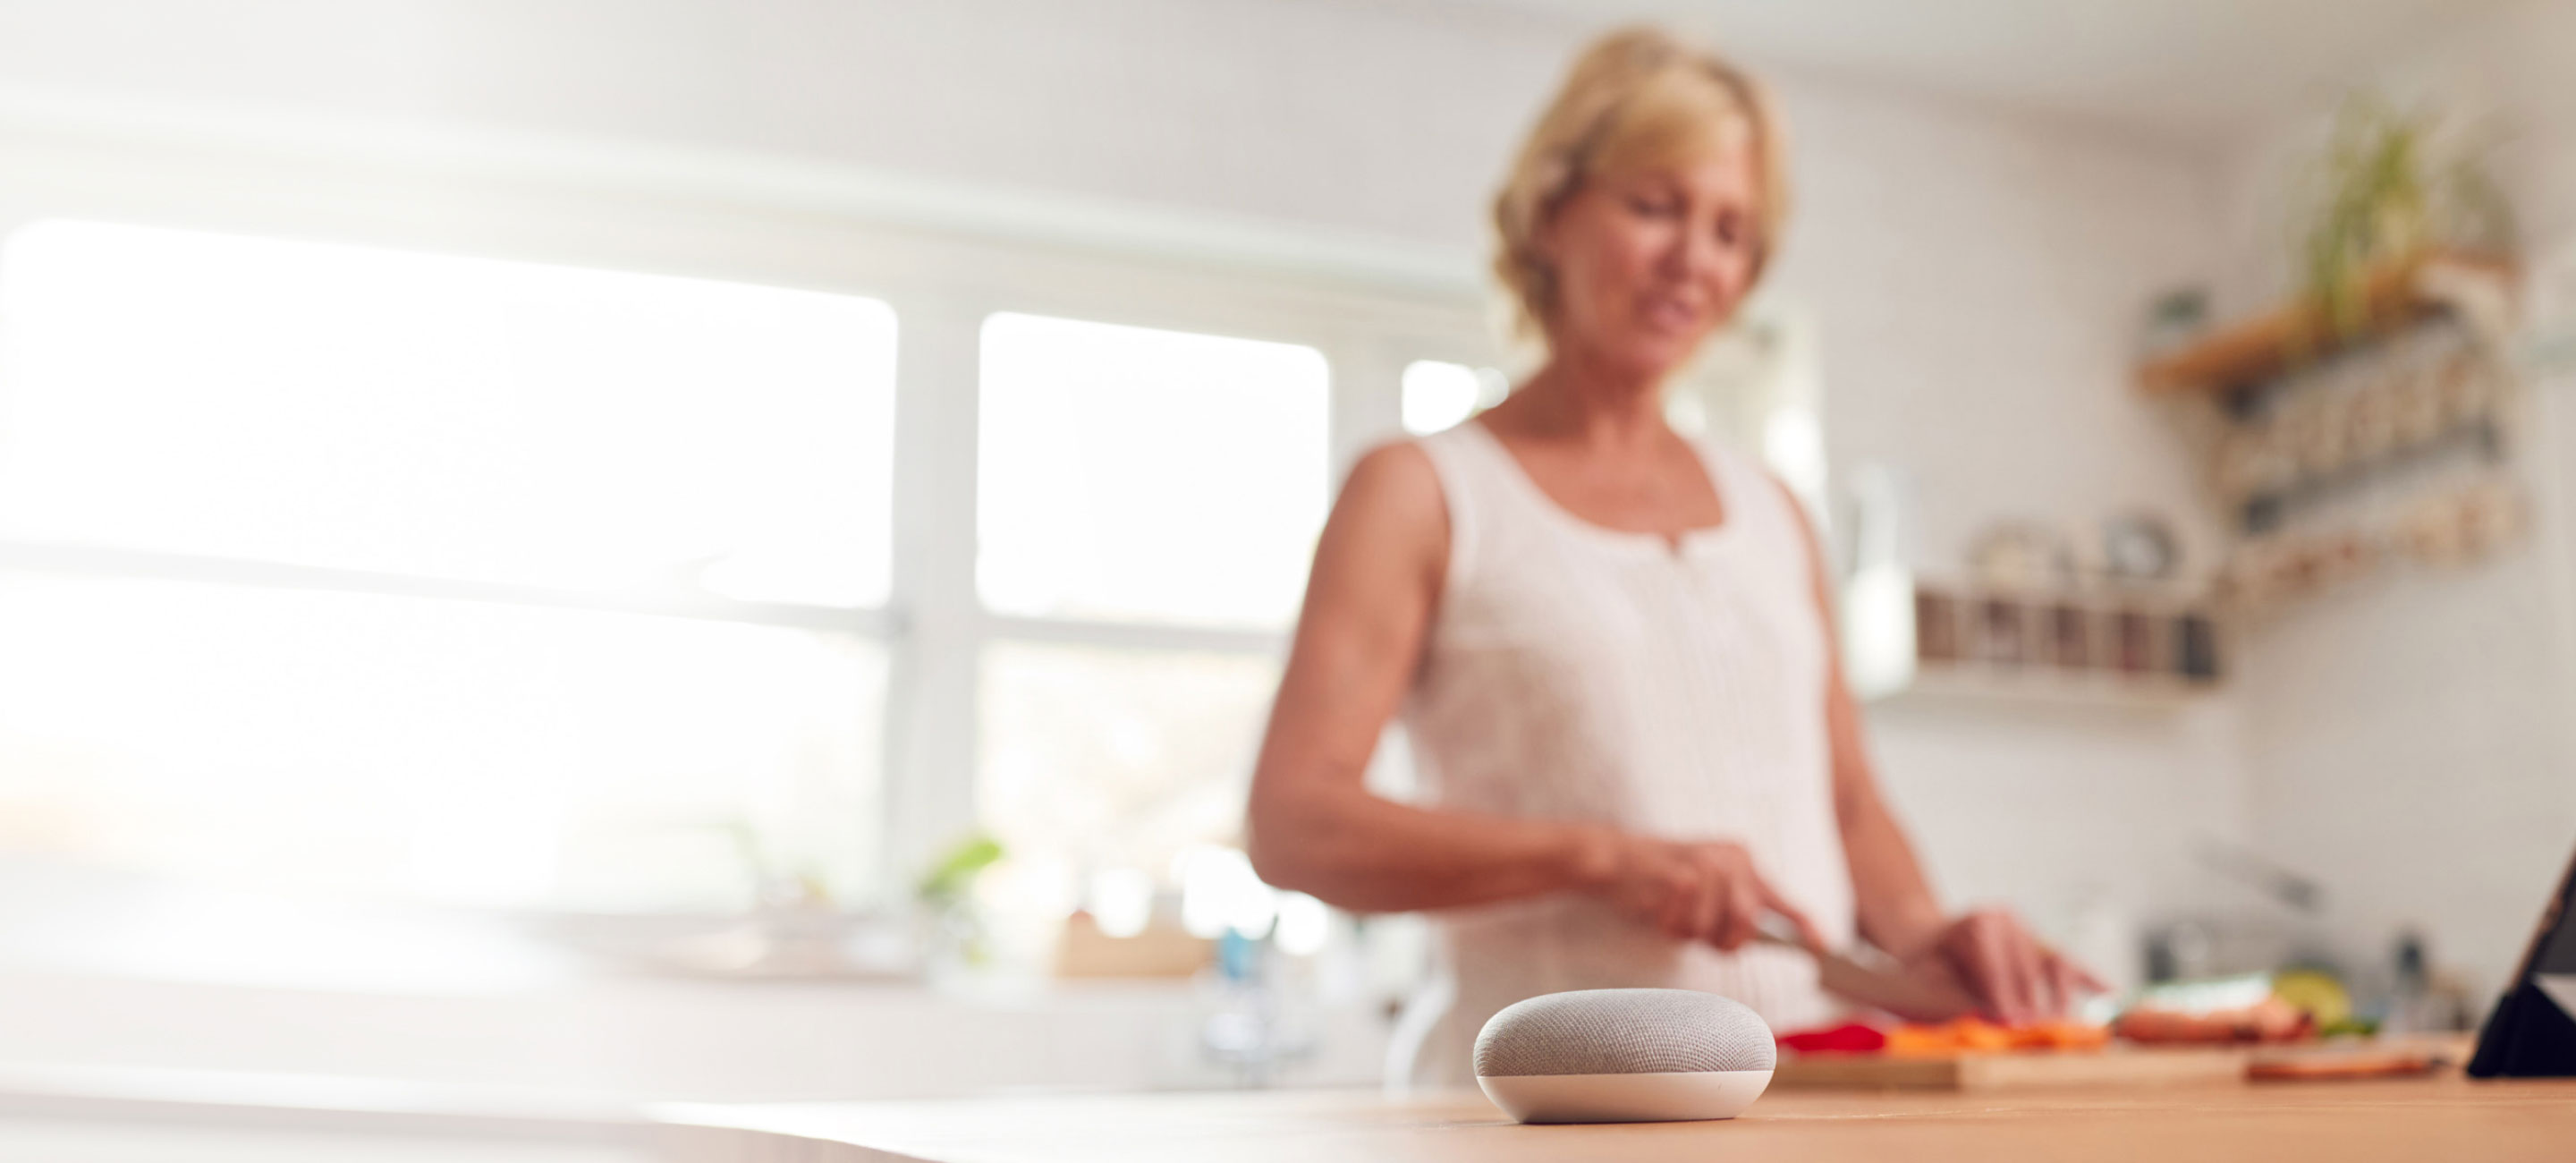 woman preparing food with smart speaker on table